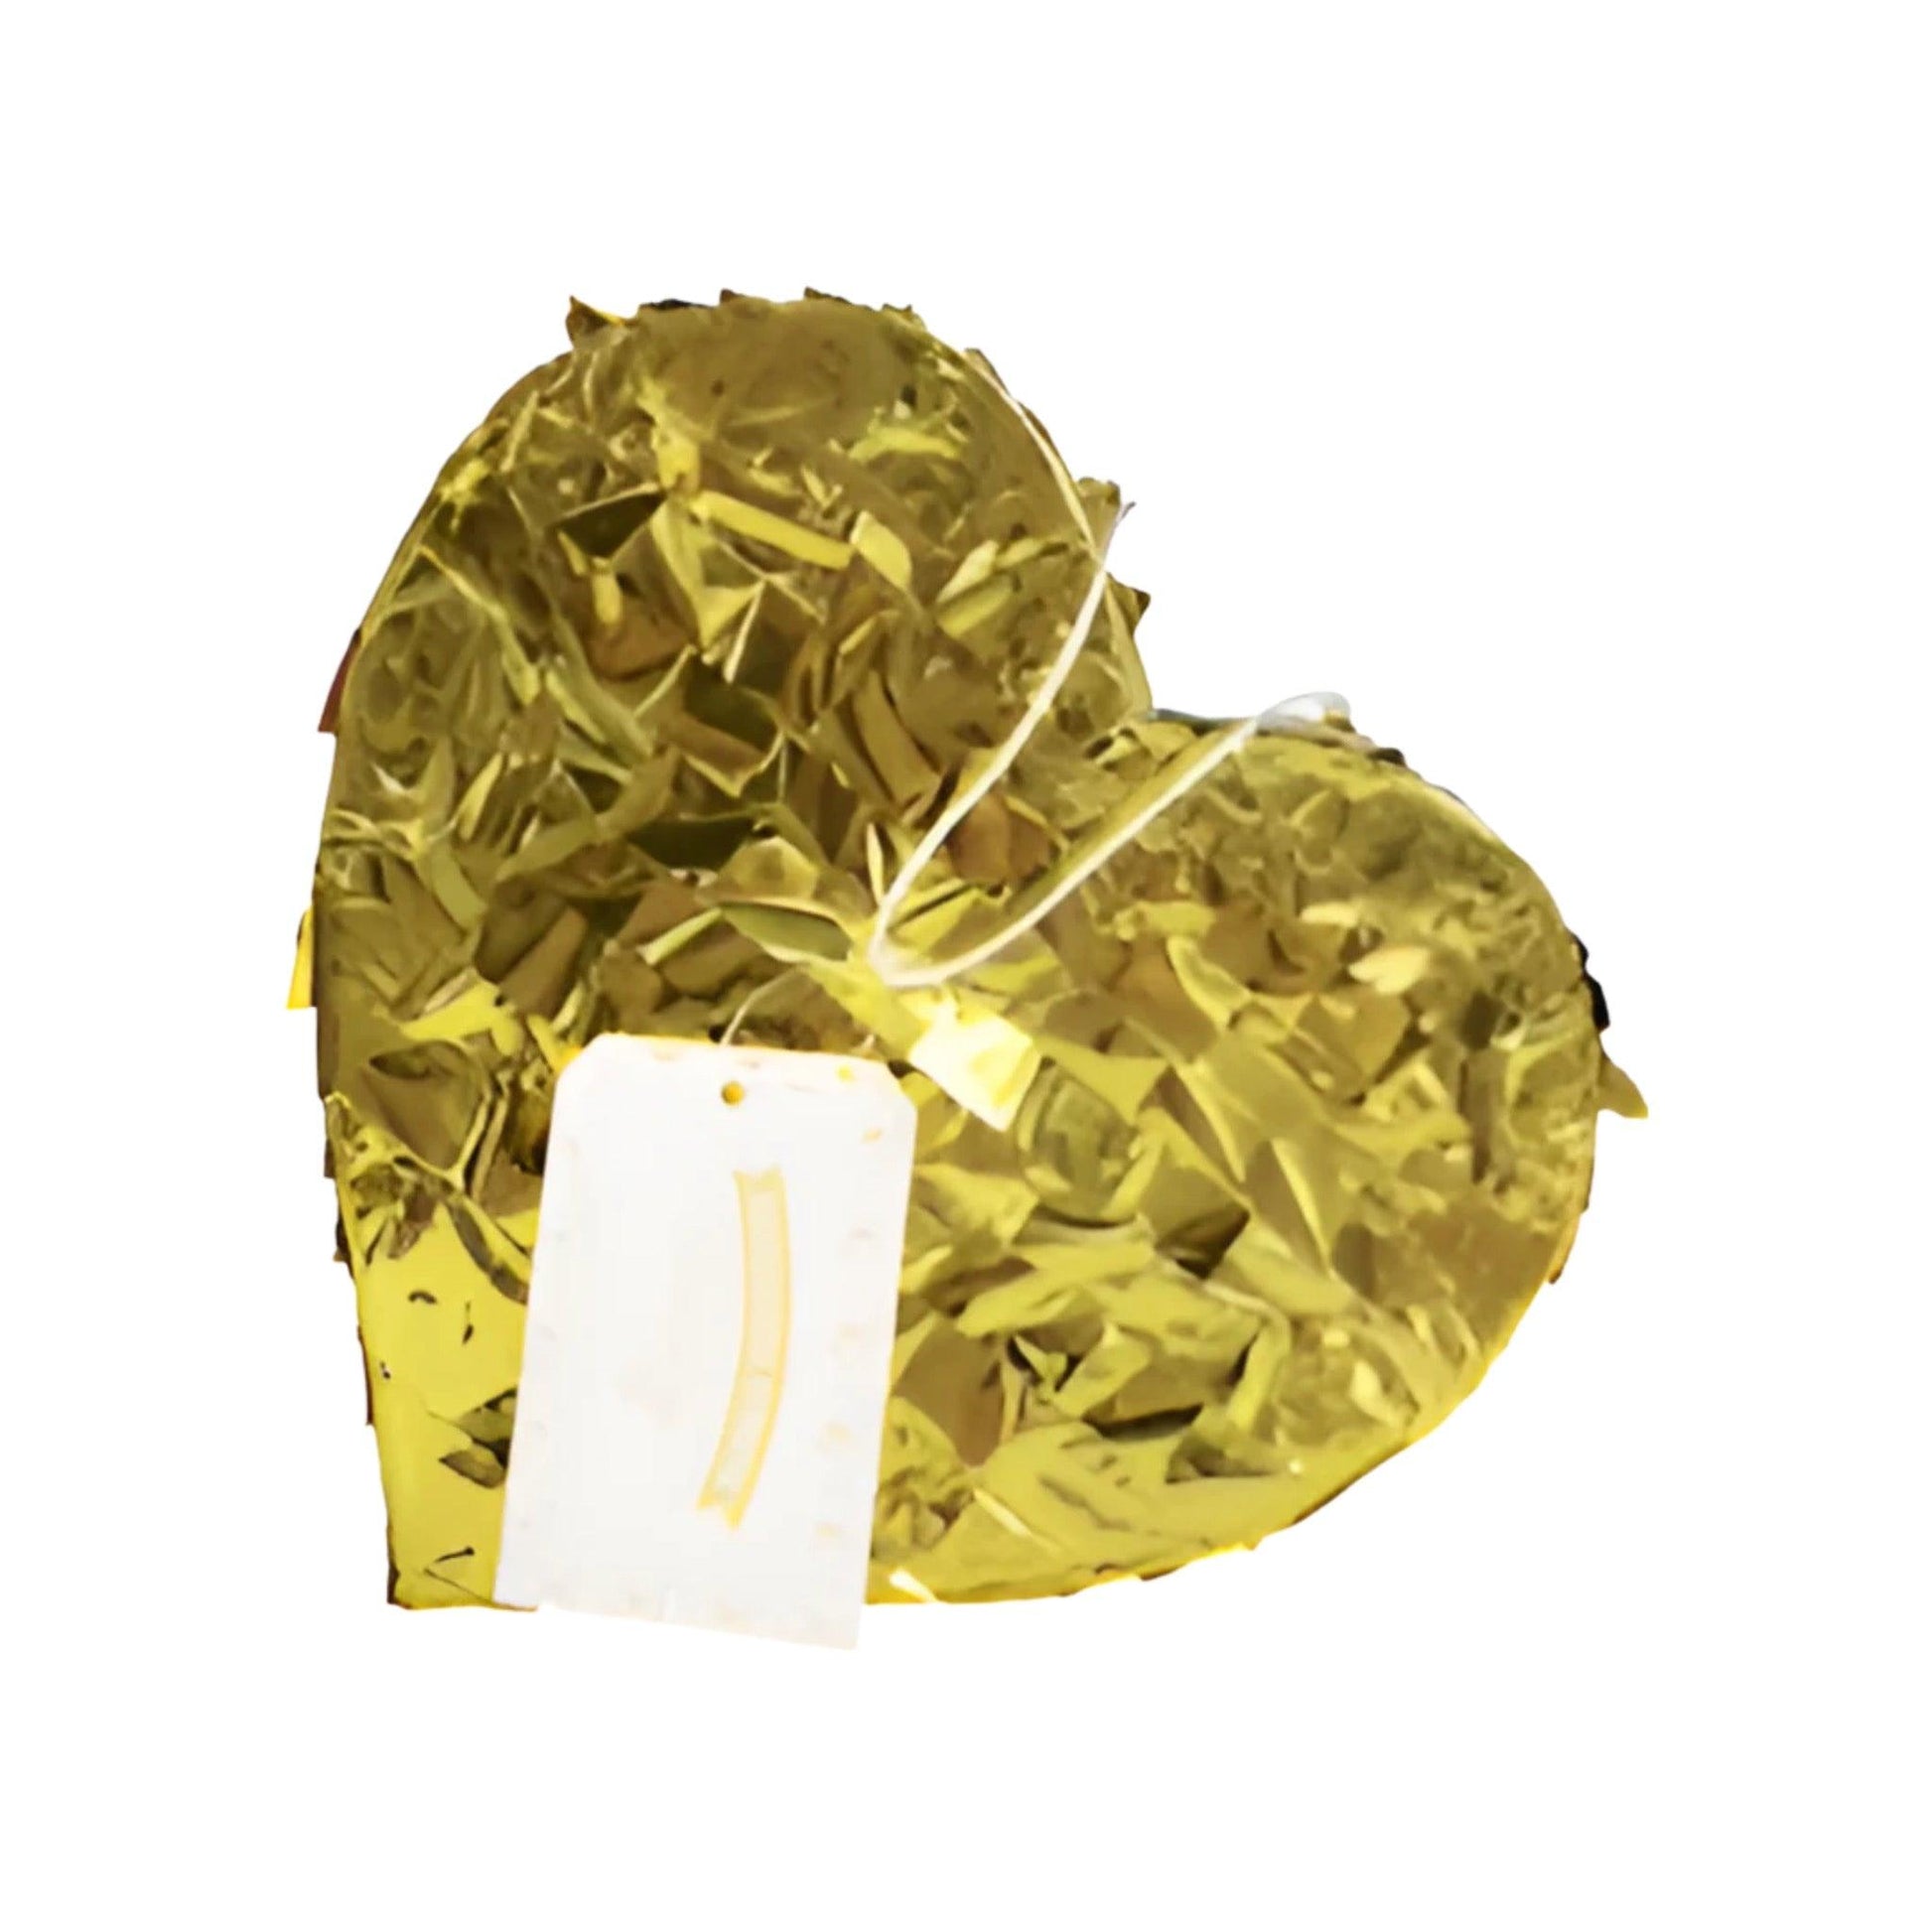 Gold sparkly heart shaped pinata